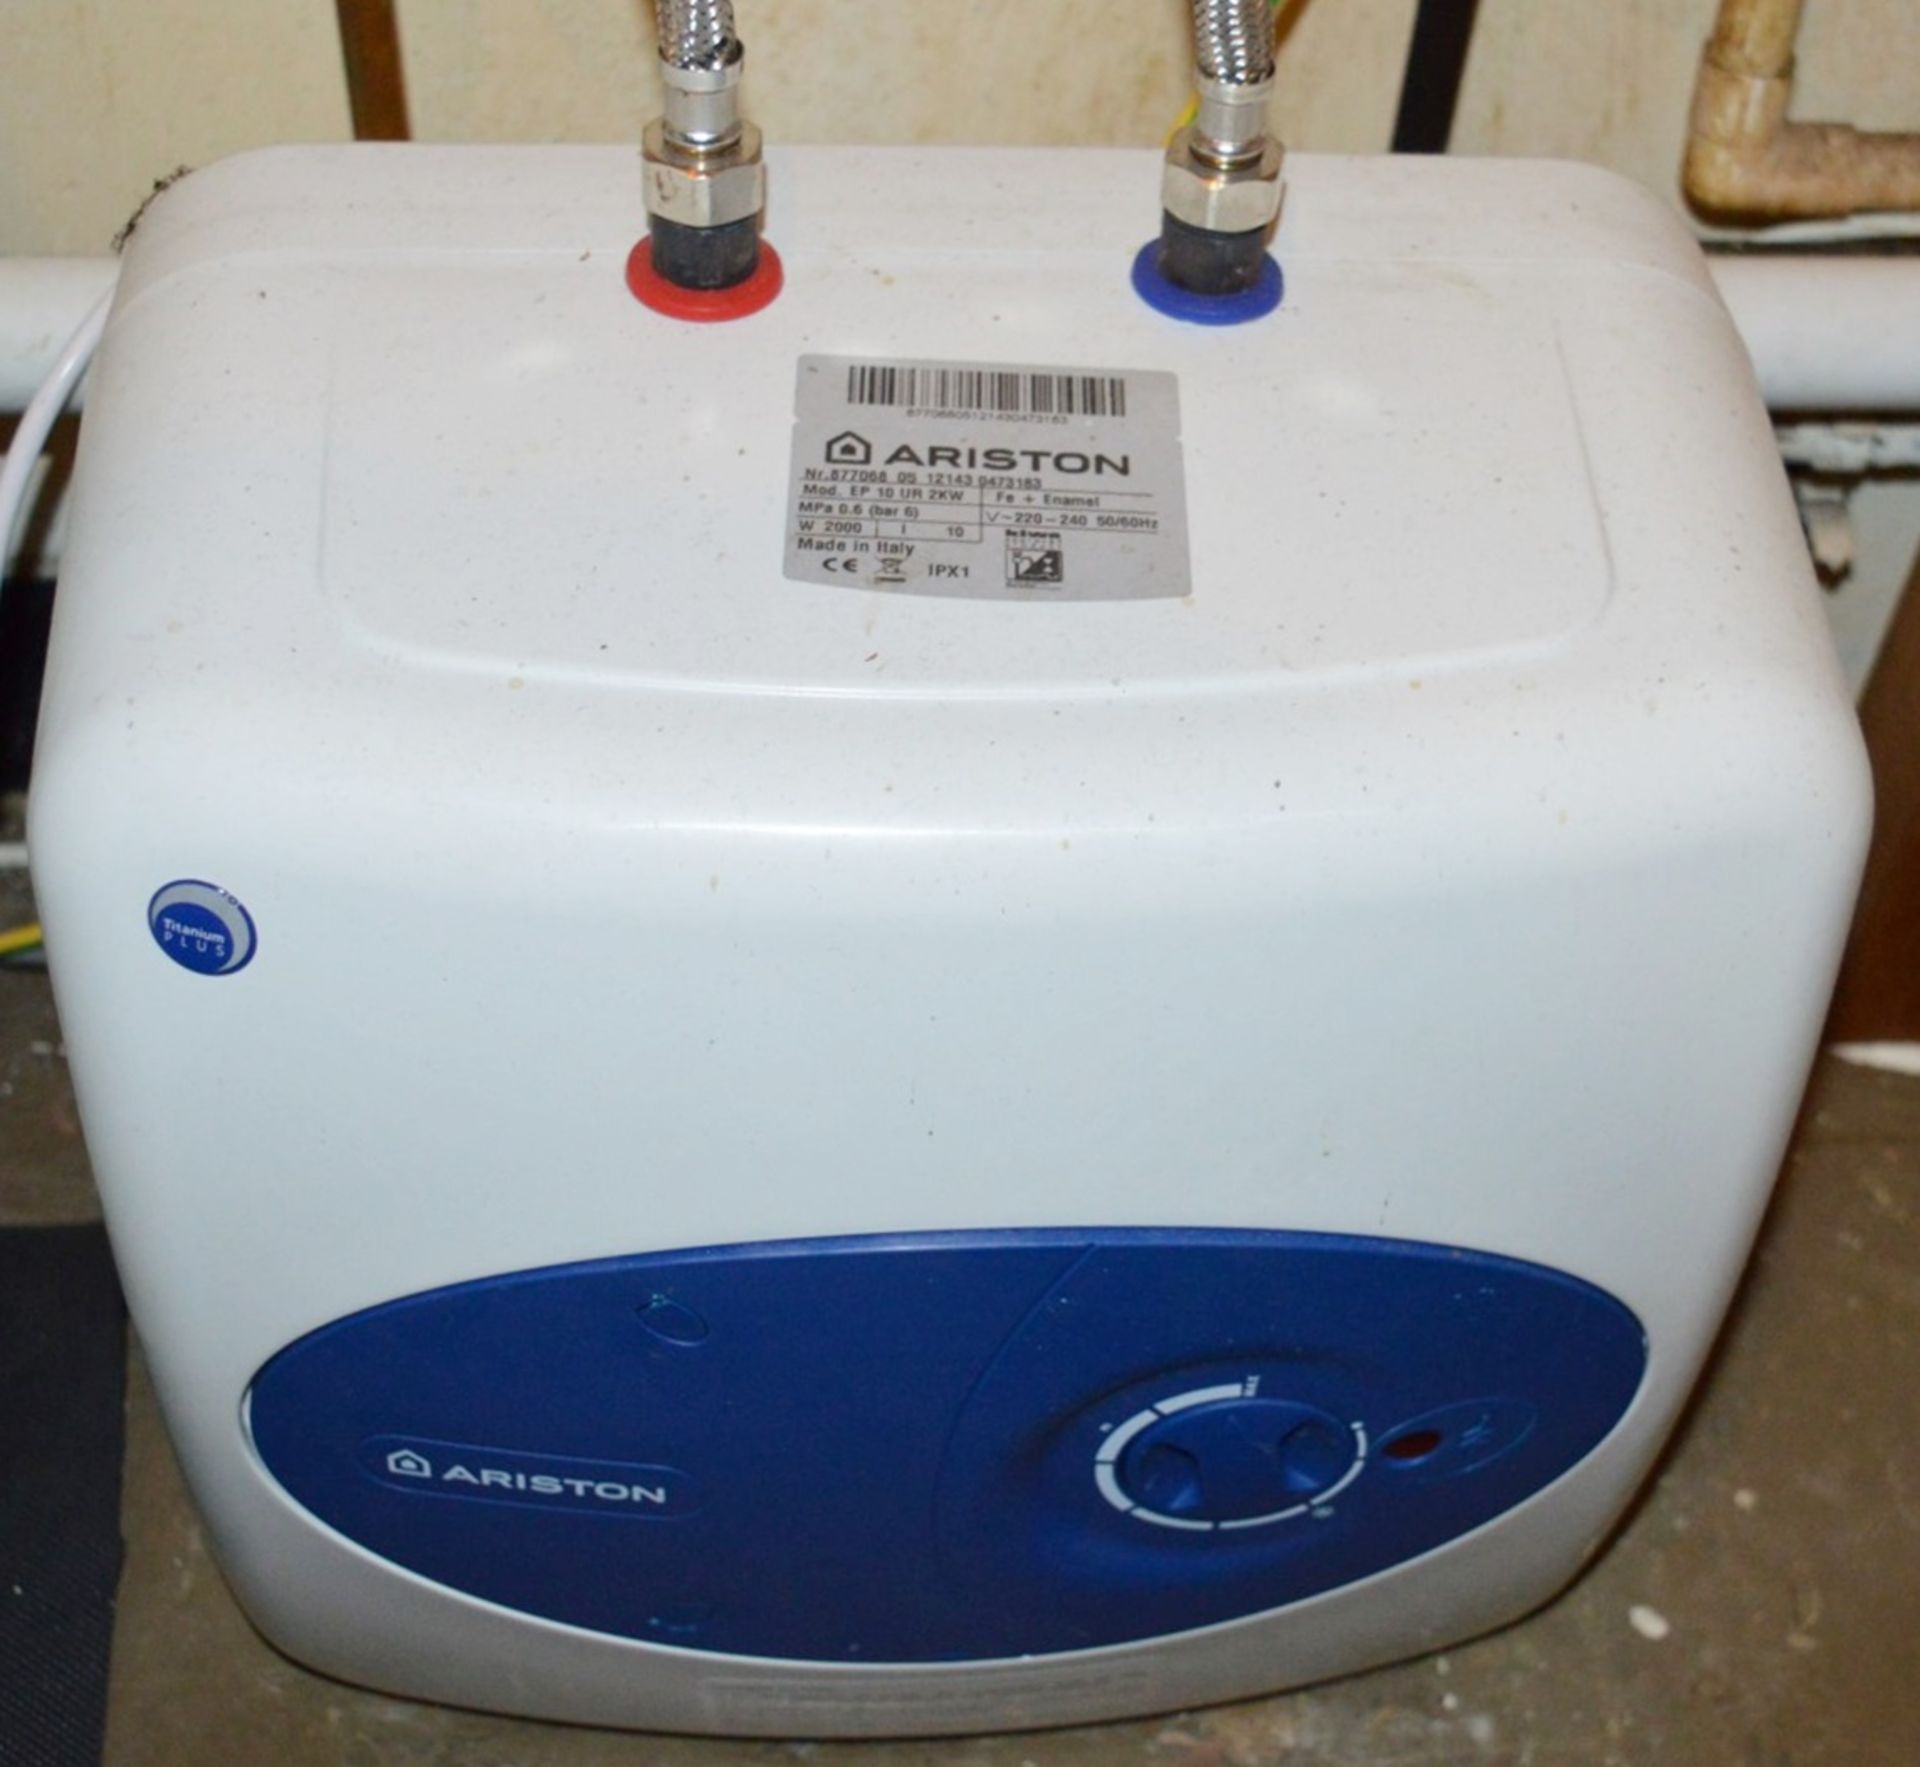 1 x Ariston Europrisma UNDER SINK Water Heater - 3kW 10 Litres - Model EP 10 UR 2KW - Ideal For